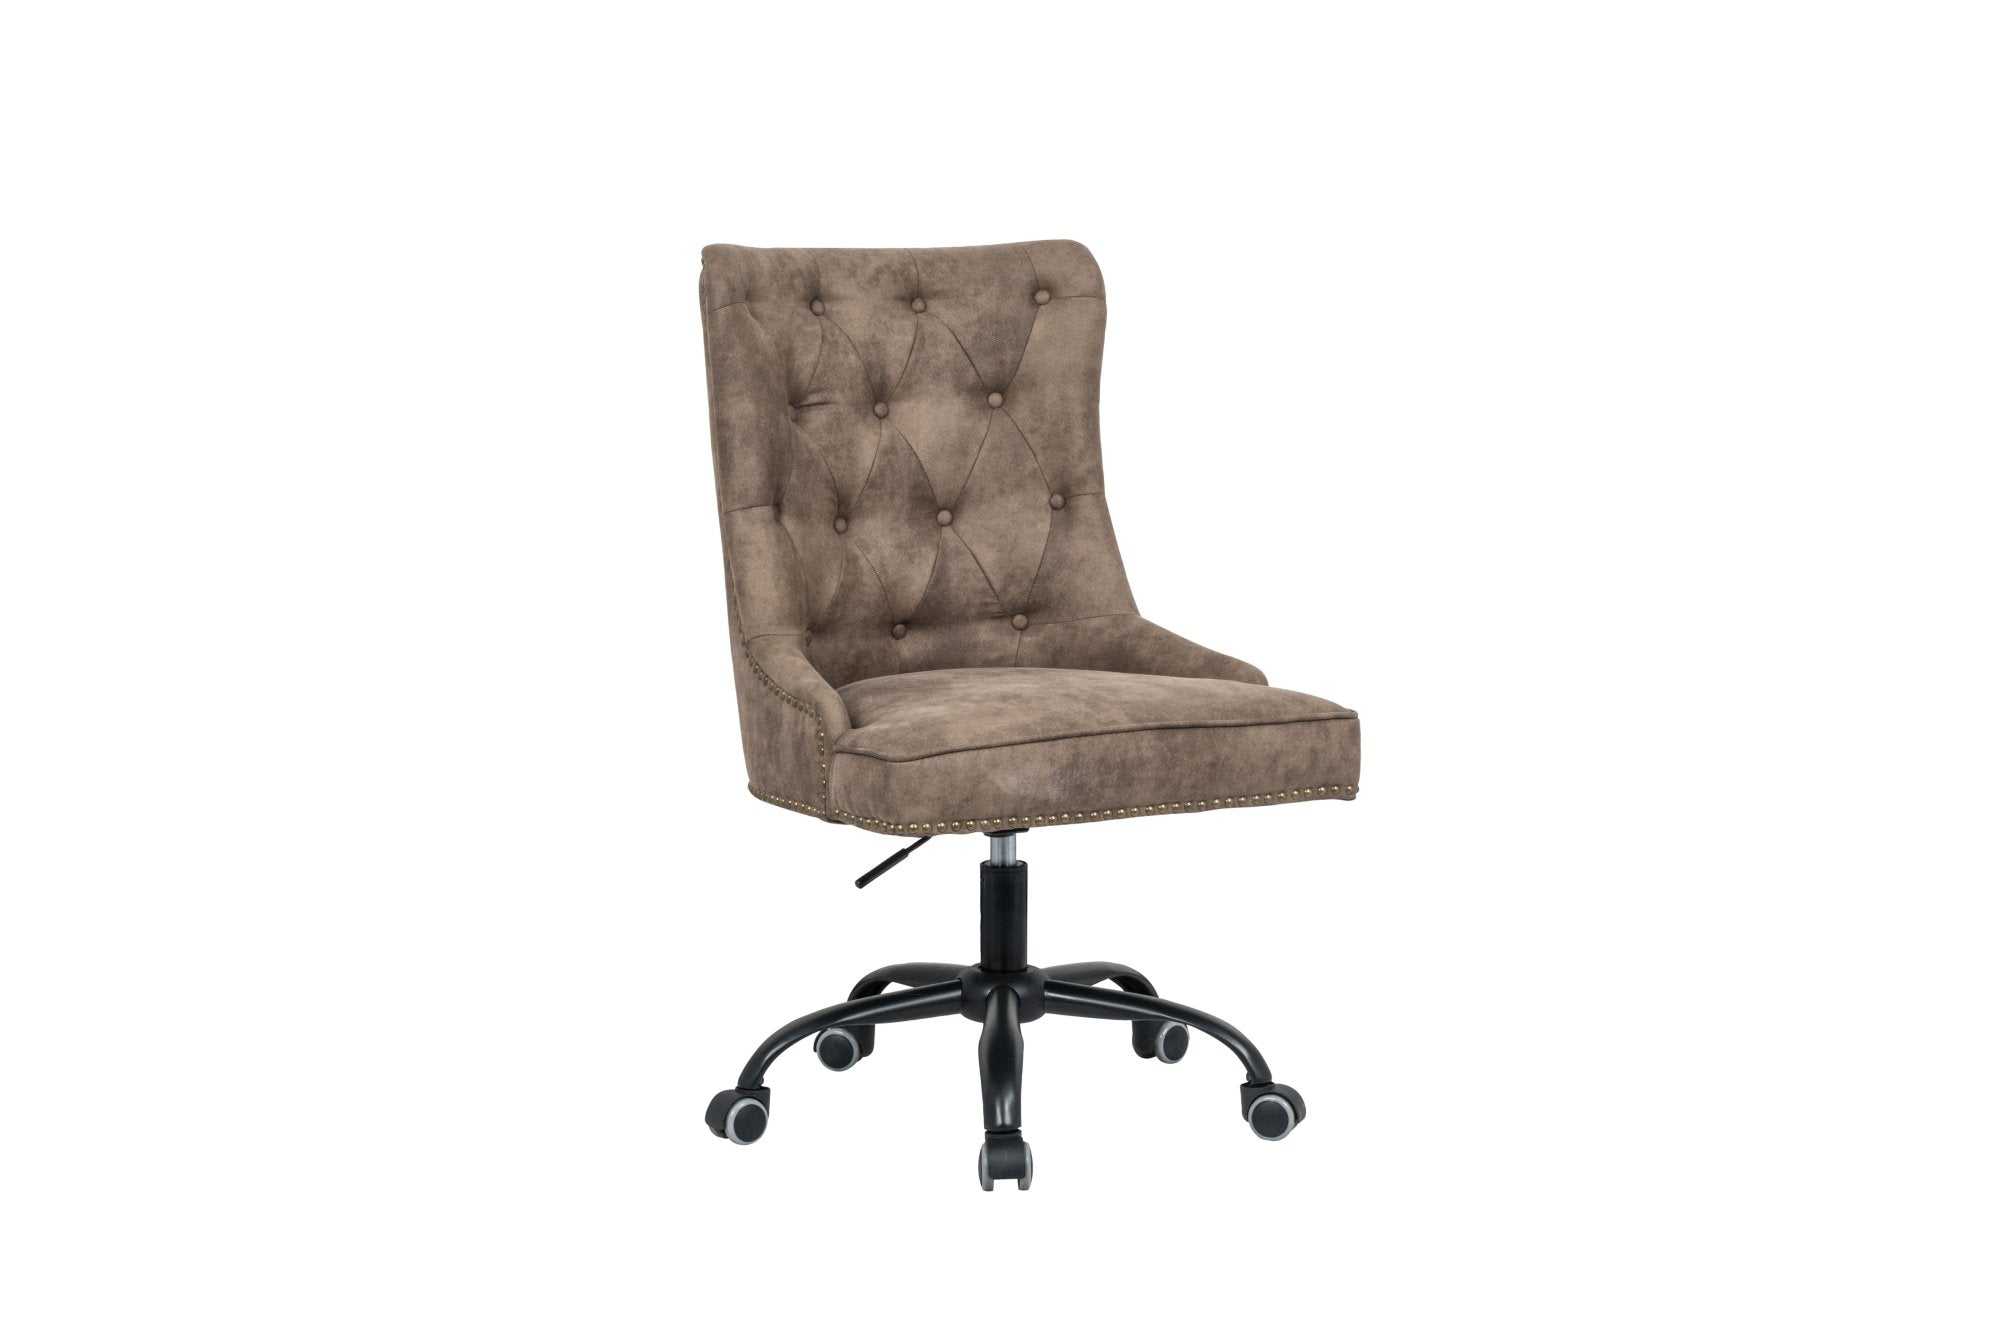 Irodai szék - VICTORIAN világosbarna karfás irodai szék